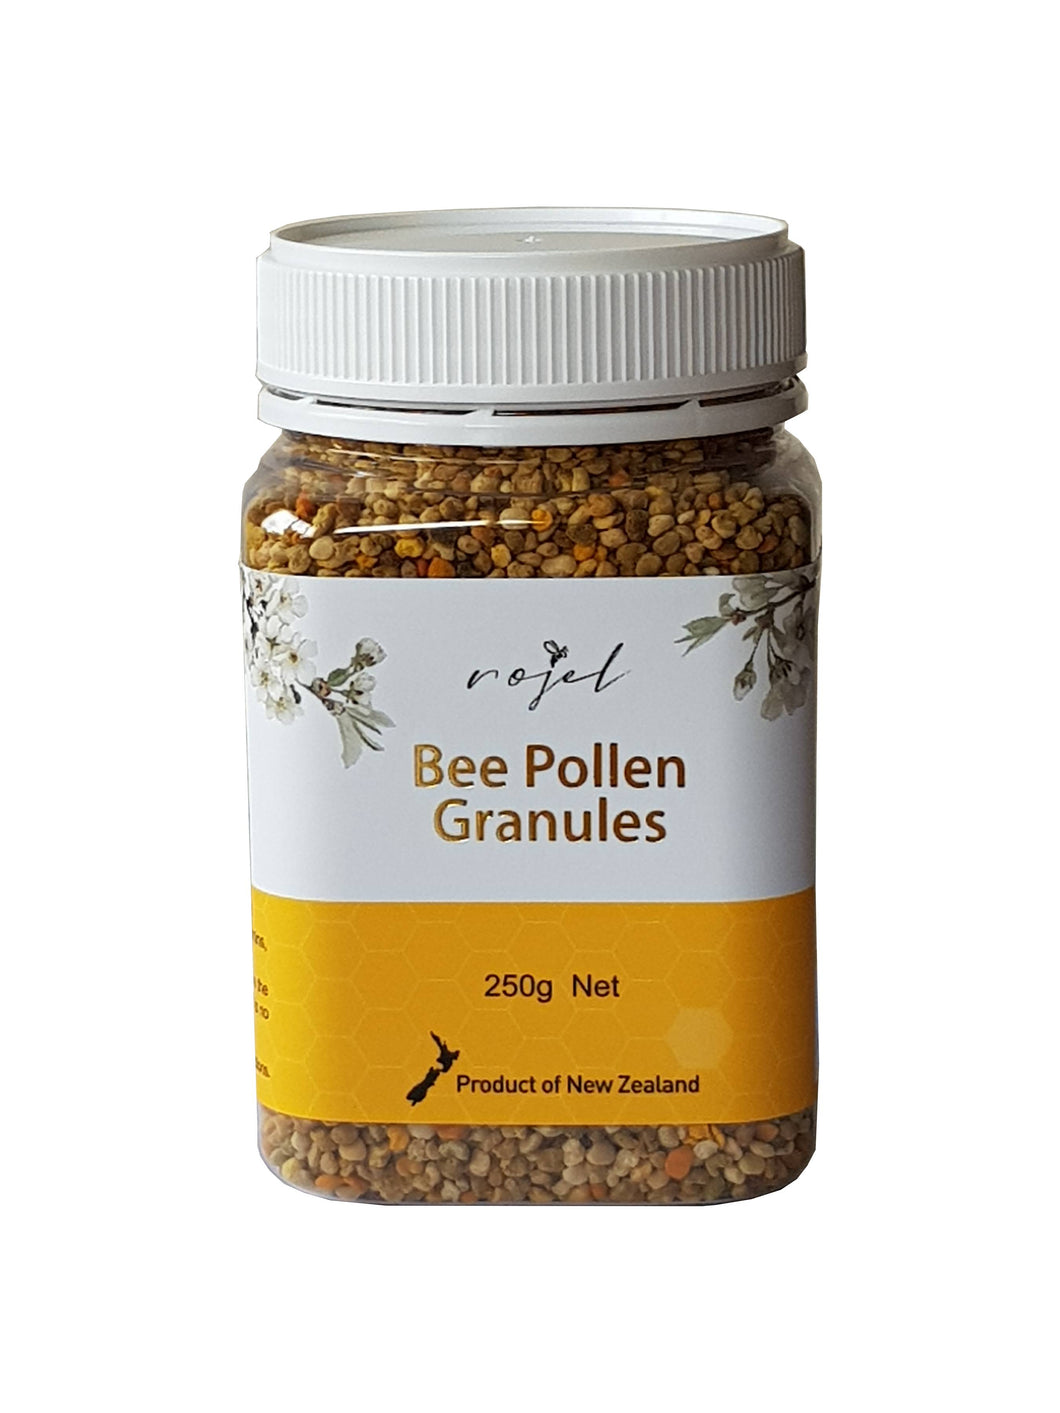 NZ Bee Pollen Granules